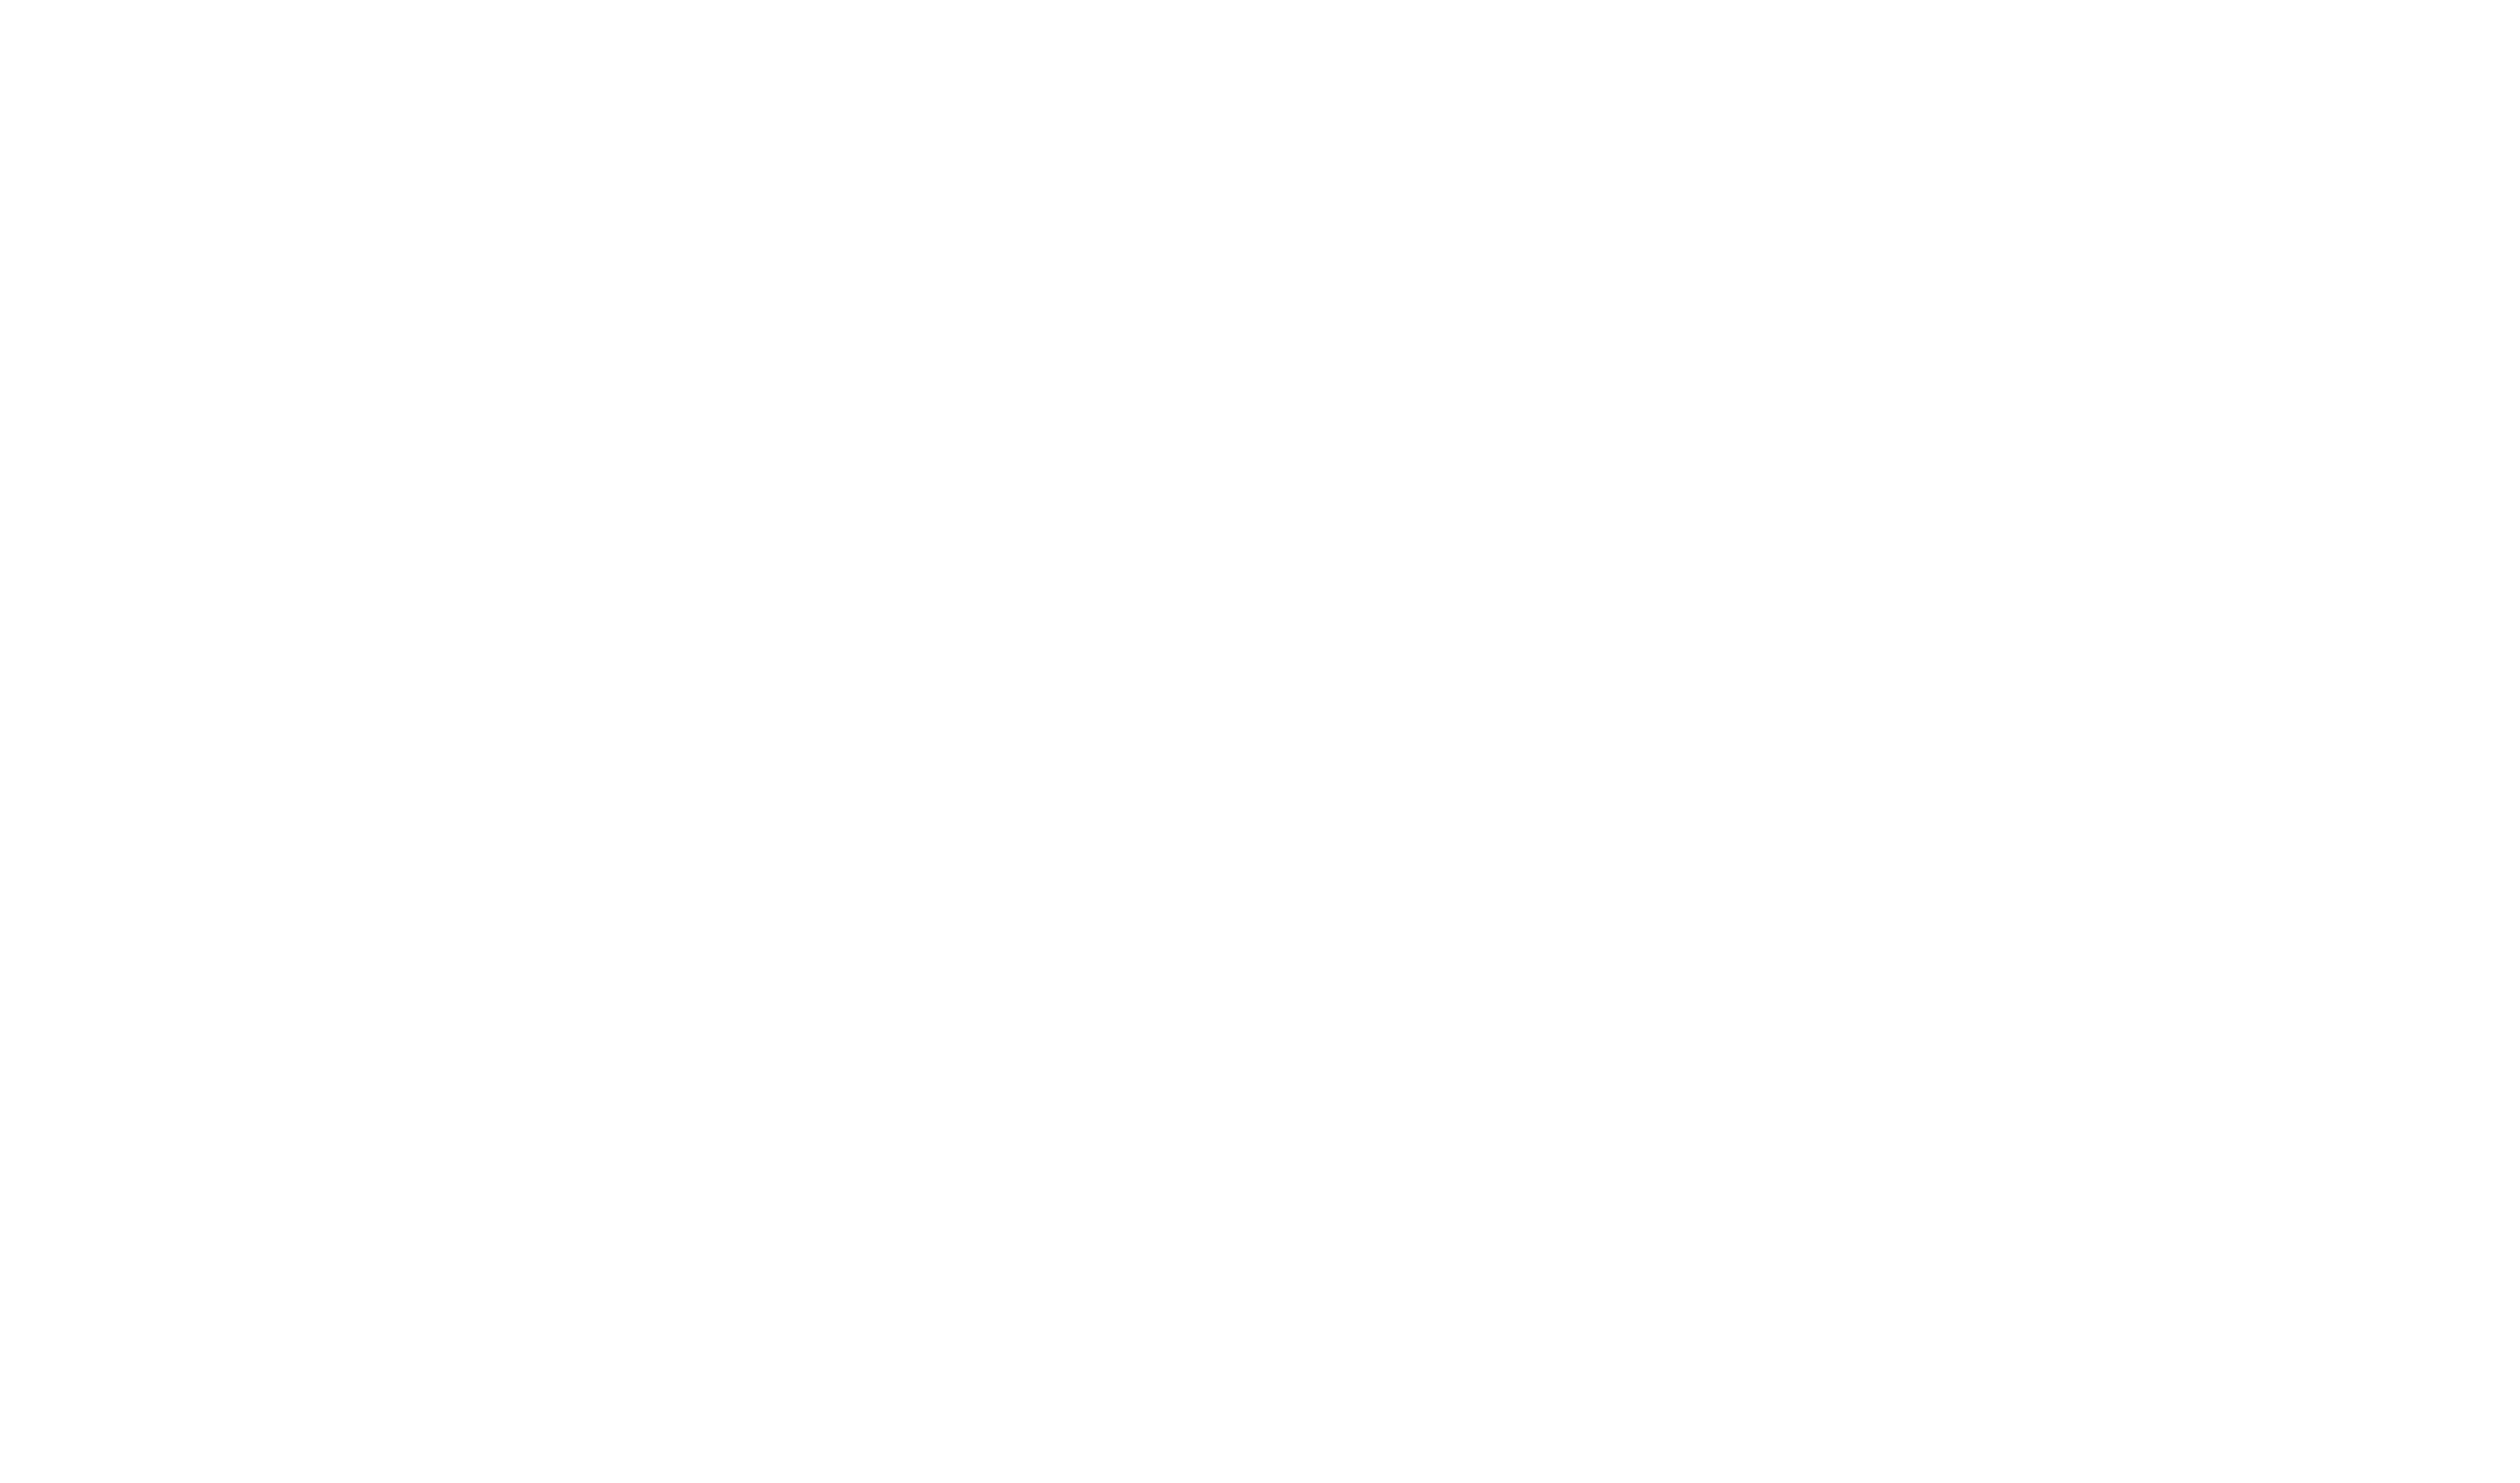 Piatt Hotel Group Logo White